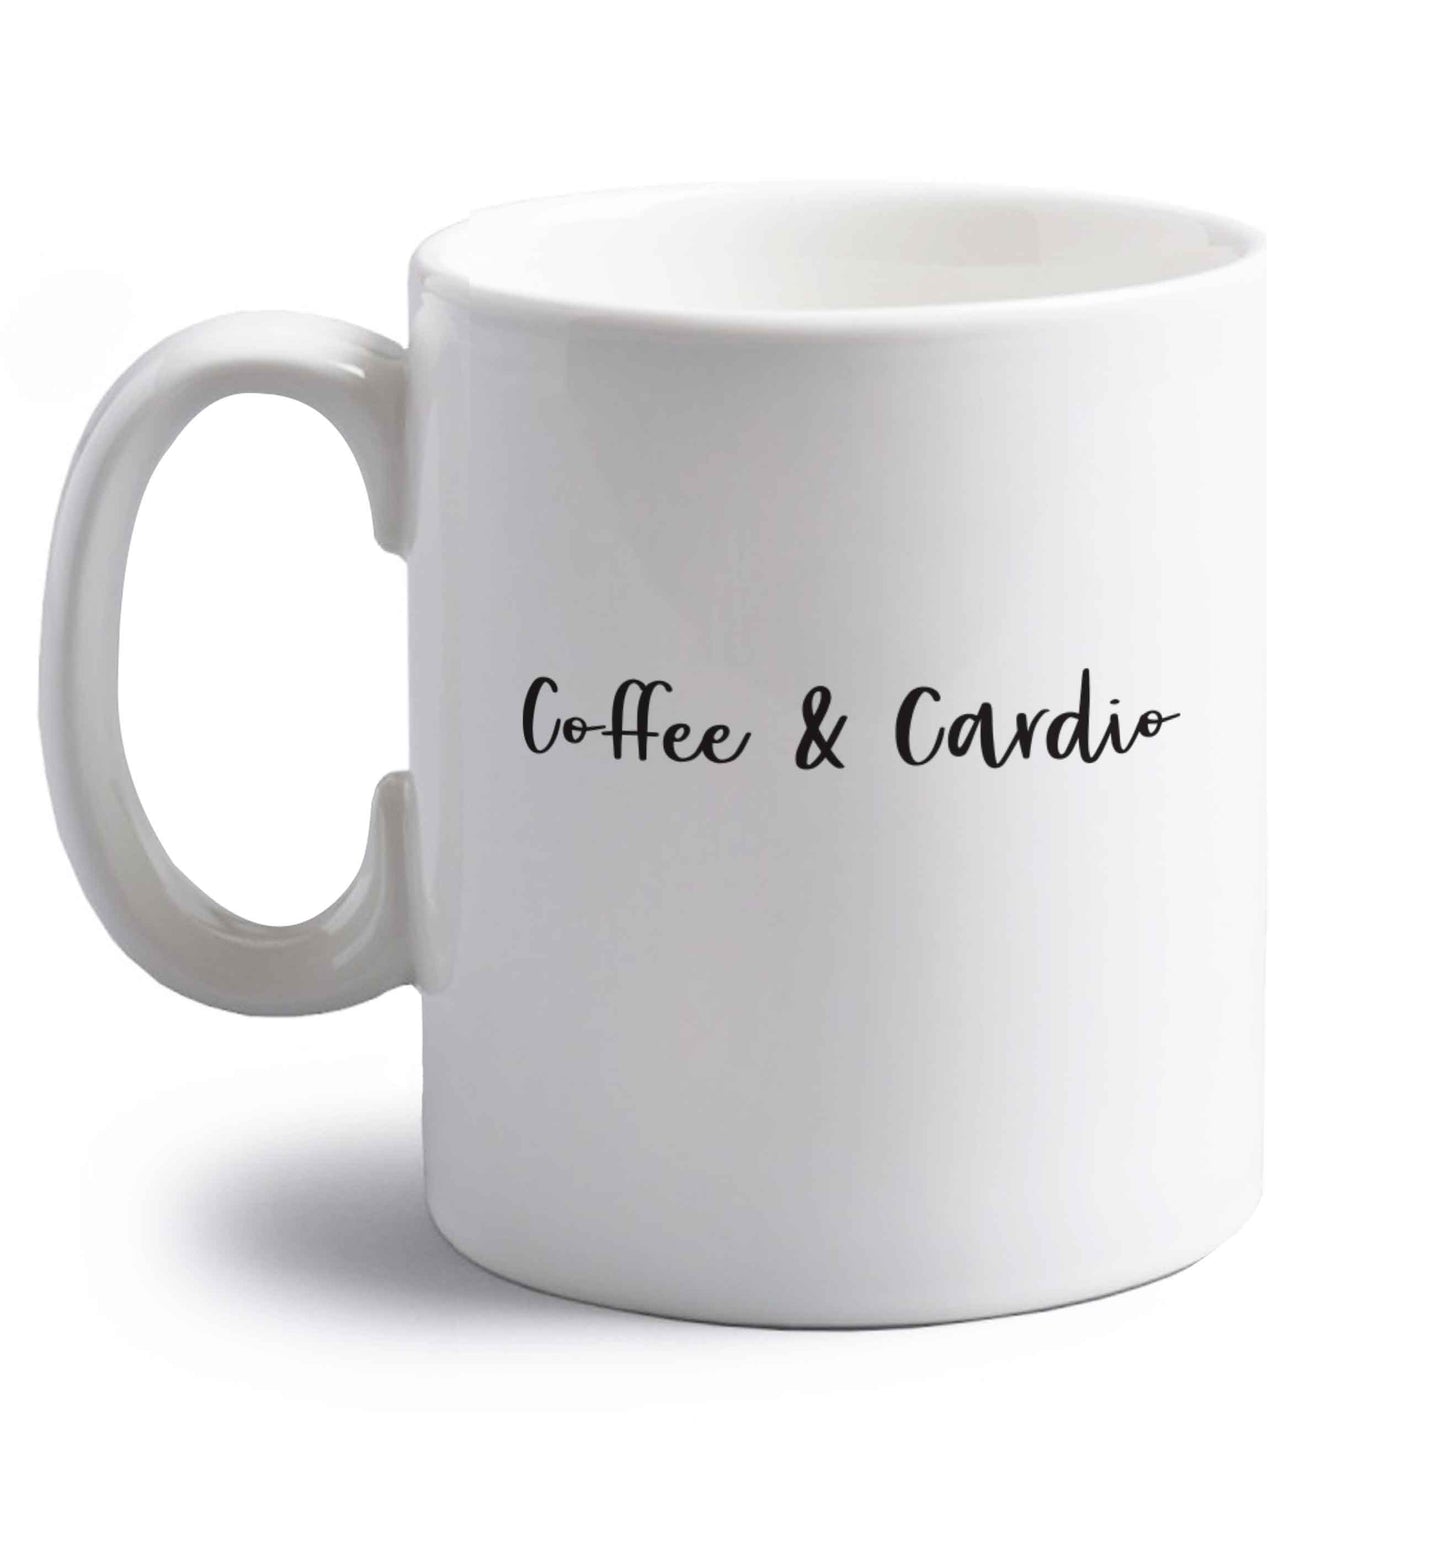 Coffee and cardio right handed white ceramic mug 